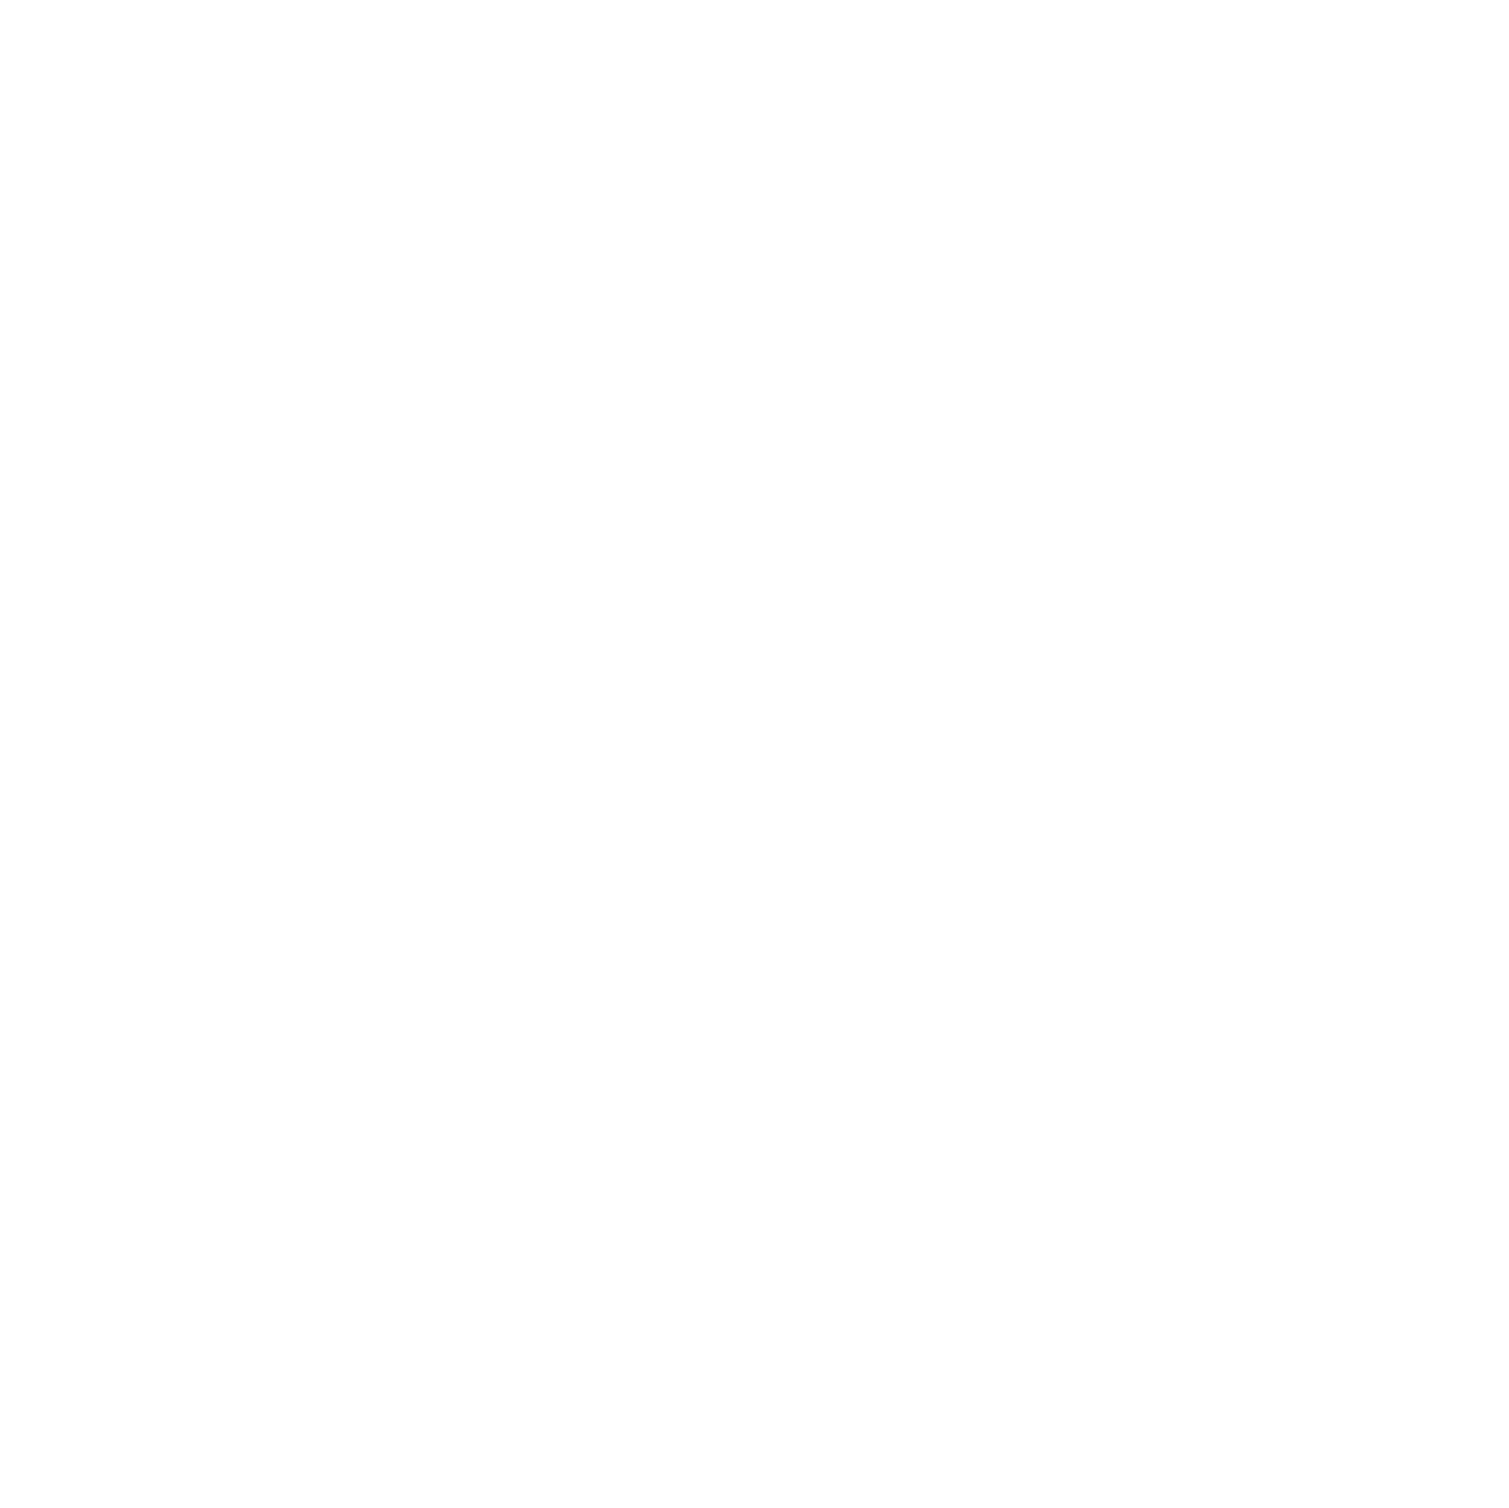 Viatris logo for dark backgrounds (transparent PNG)